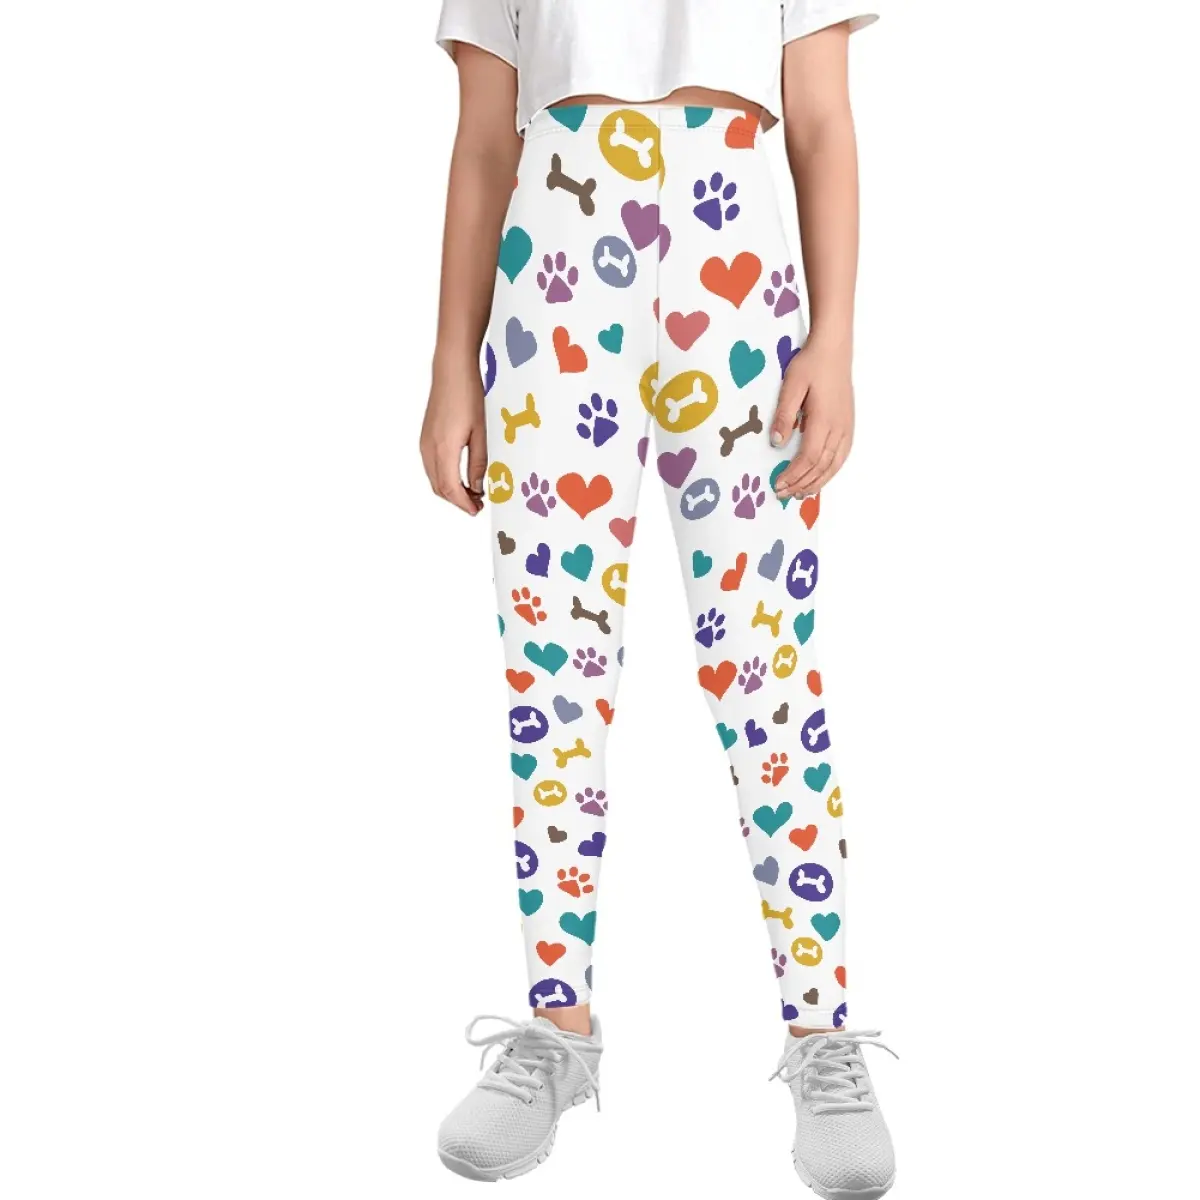 Dropshipping 어린이를위한 맞춤형 레깅스 인쇄 스포츠 피트니스 요가 패션 야외 제조 업체 어린이를위한 옷을 착용